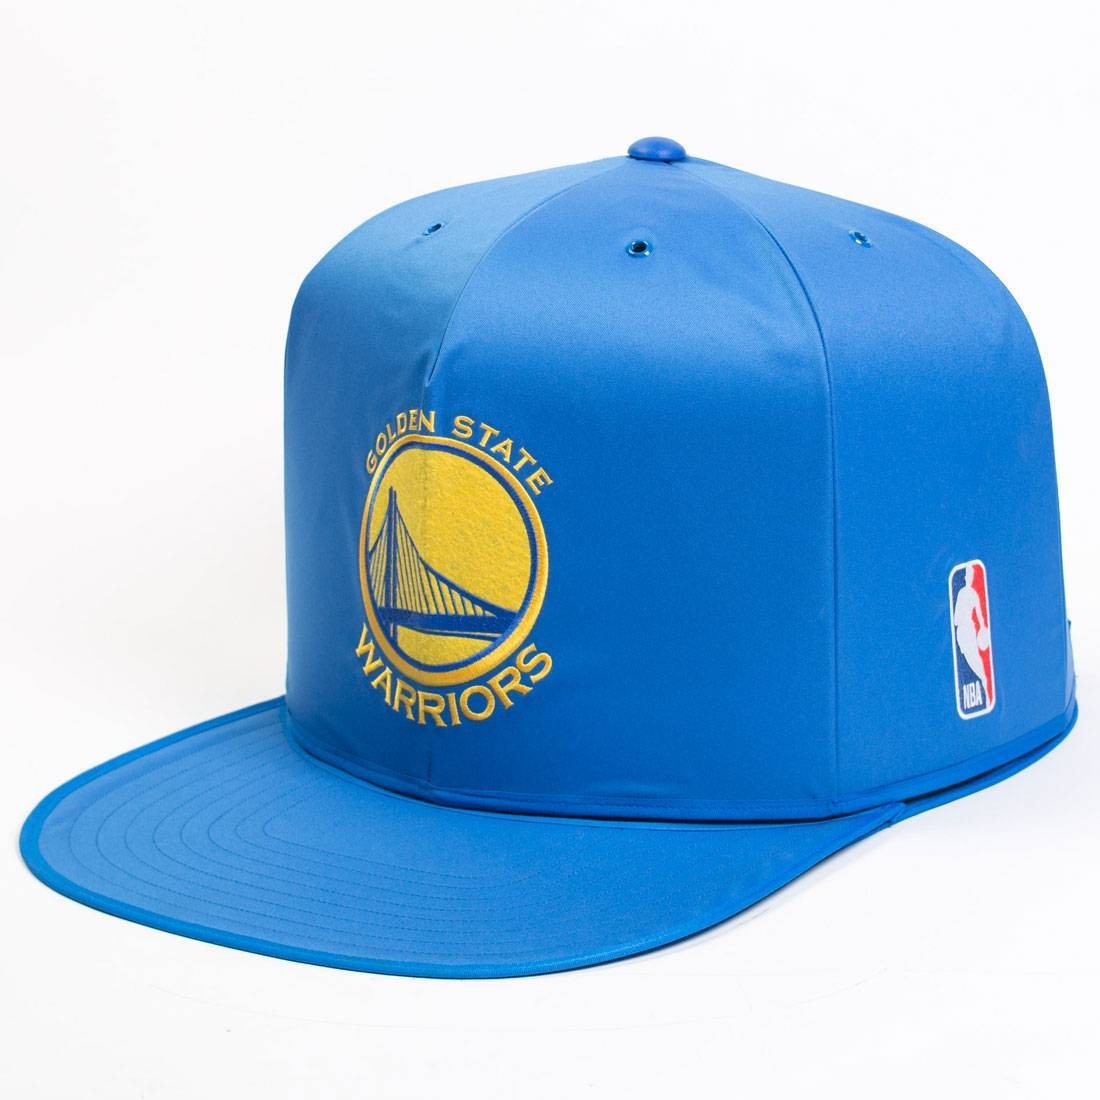 Nap Cap x NBA Golden State Warriors Indoor Pet House (blue)